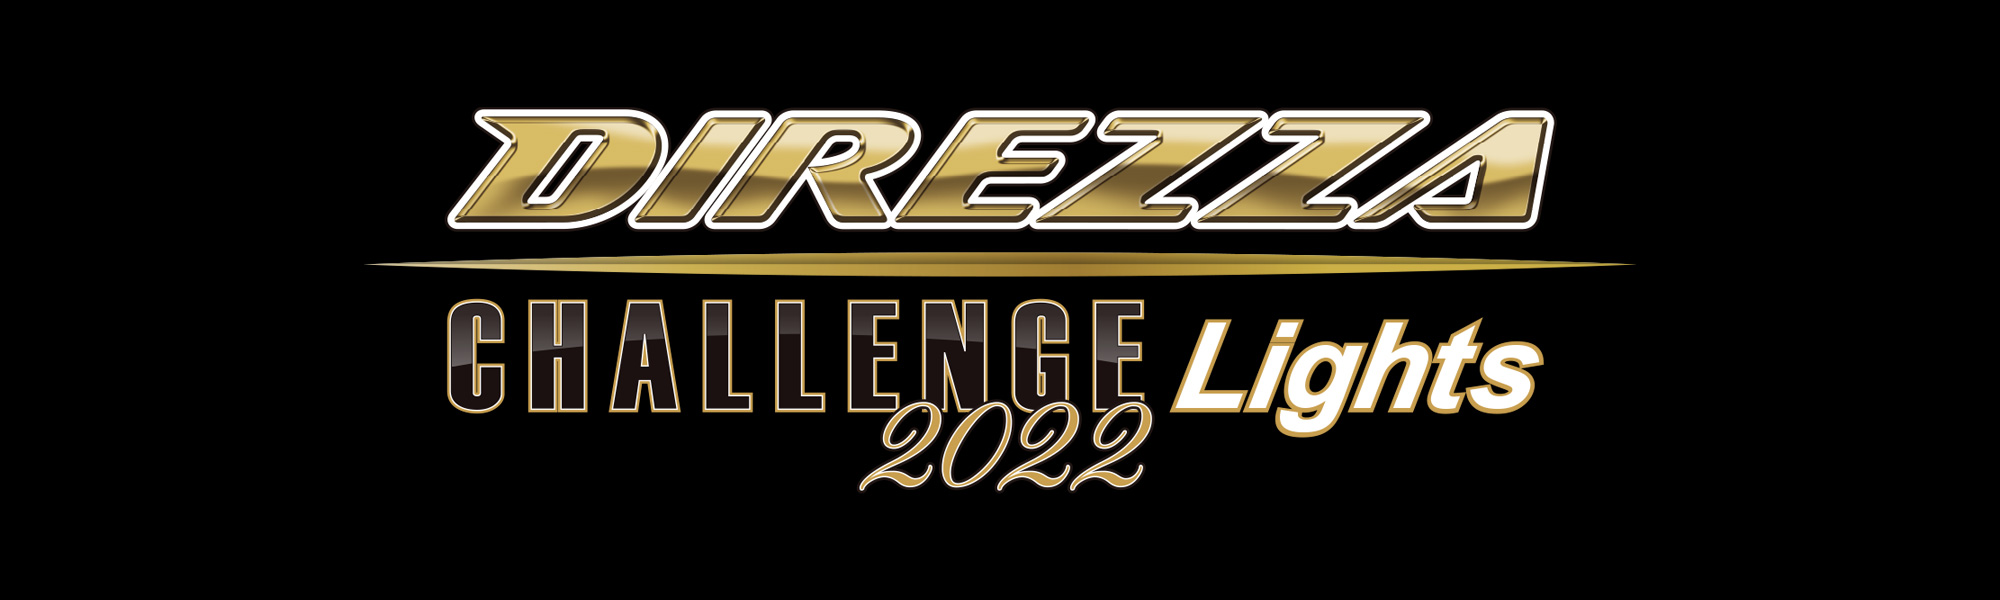 DIREZZA CHALLENGE Lights 2021